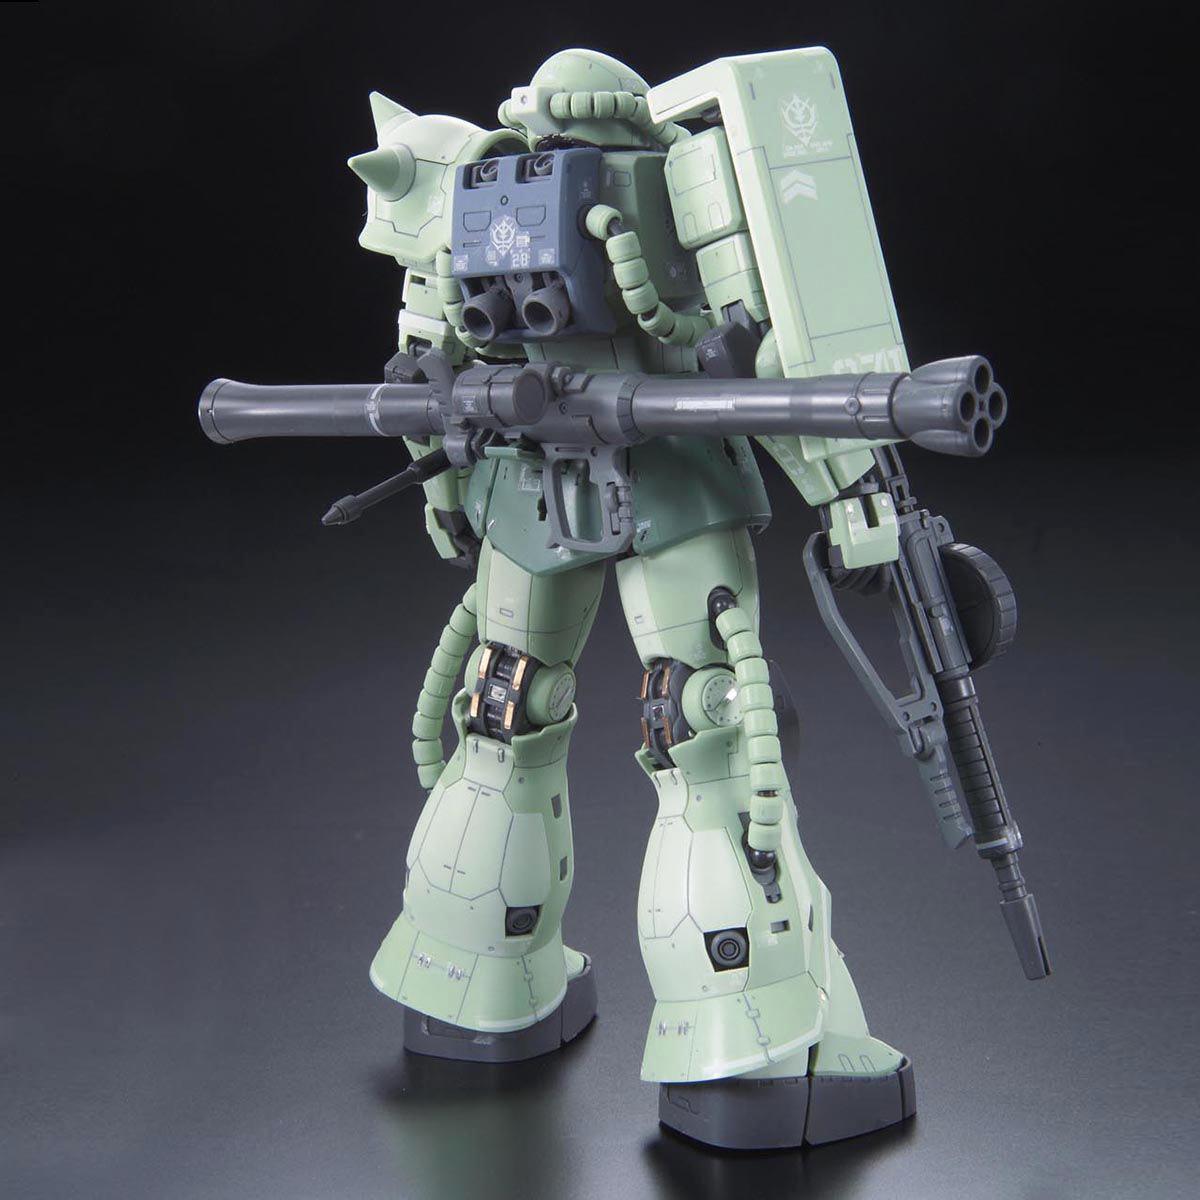 Gundam 0079 1/144 RG 04 Ms-06f Zaku II Model Kit Bandai Real Grade for sale online 